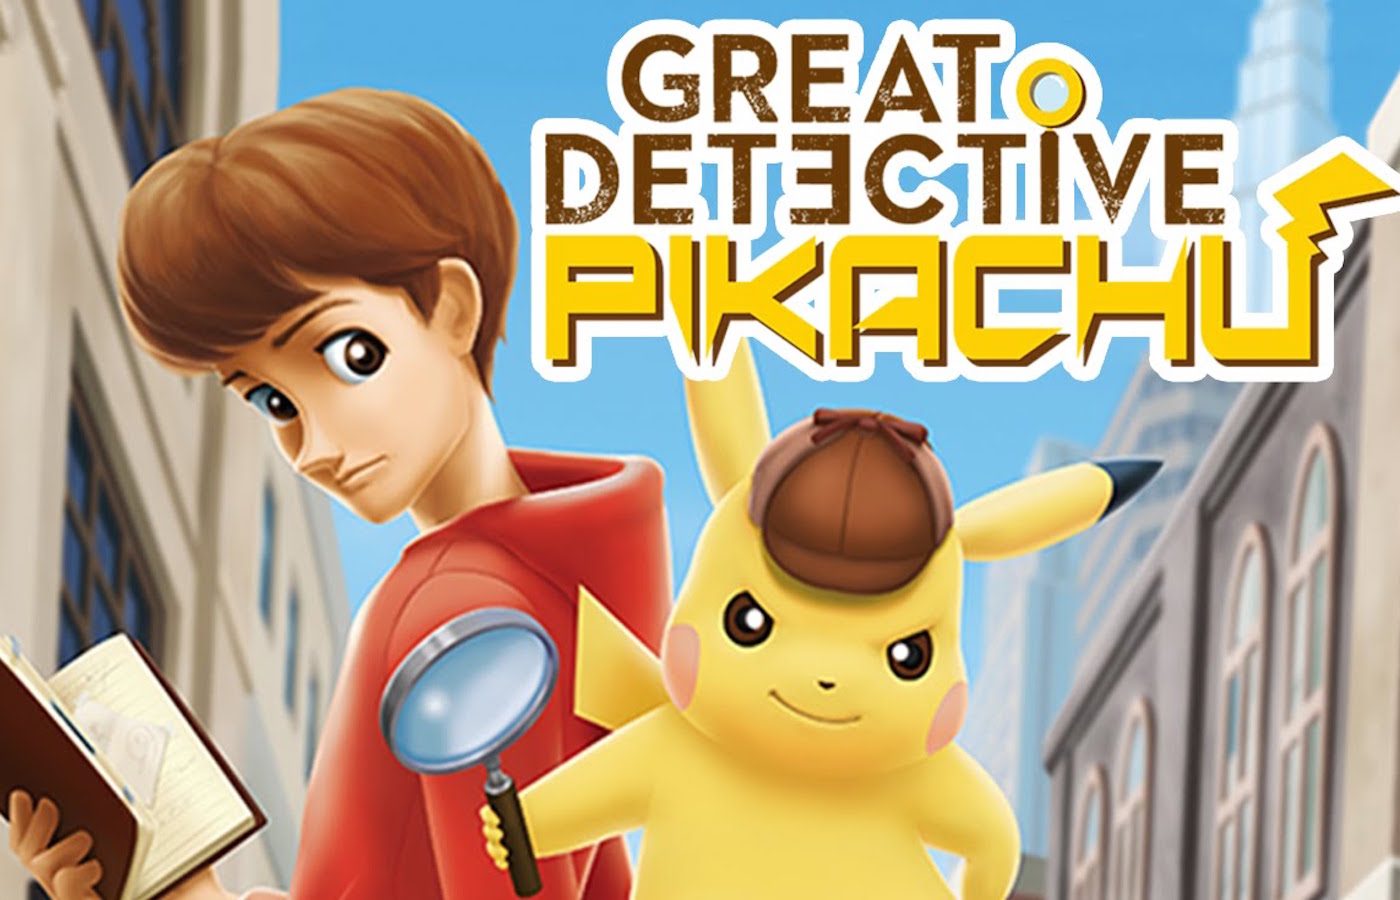 Detective pikachu movie